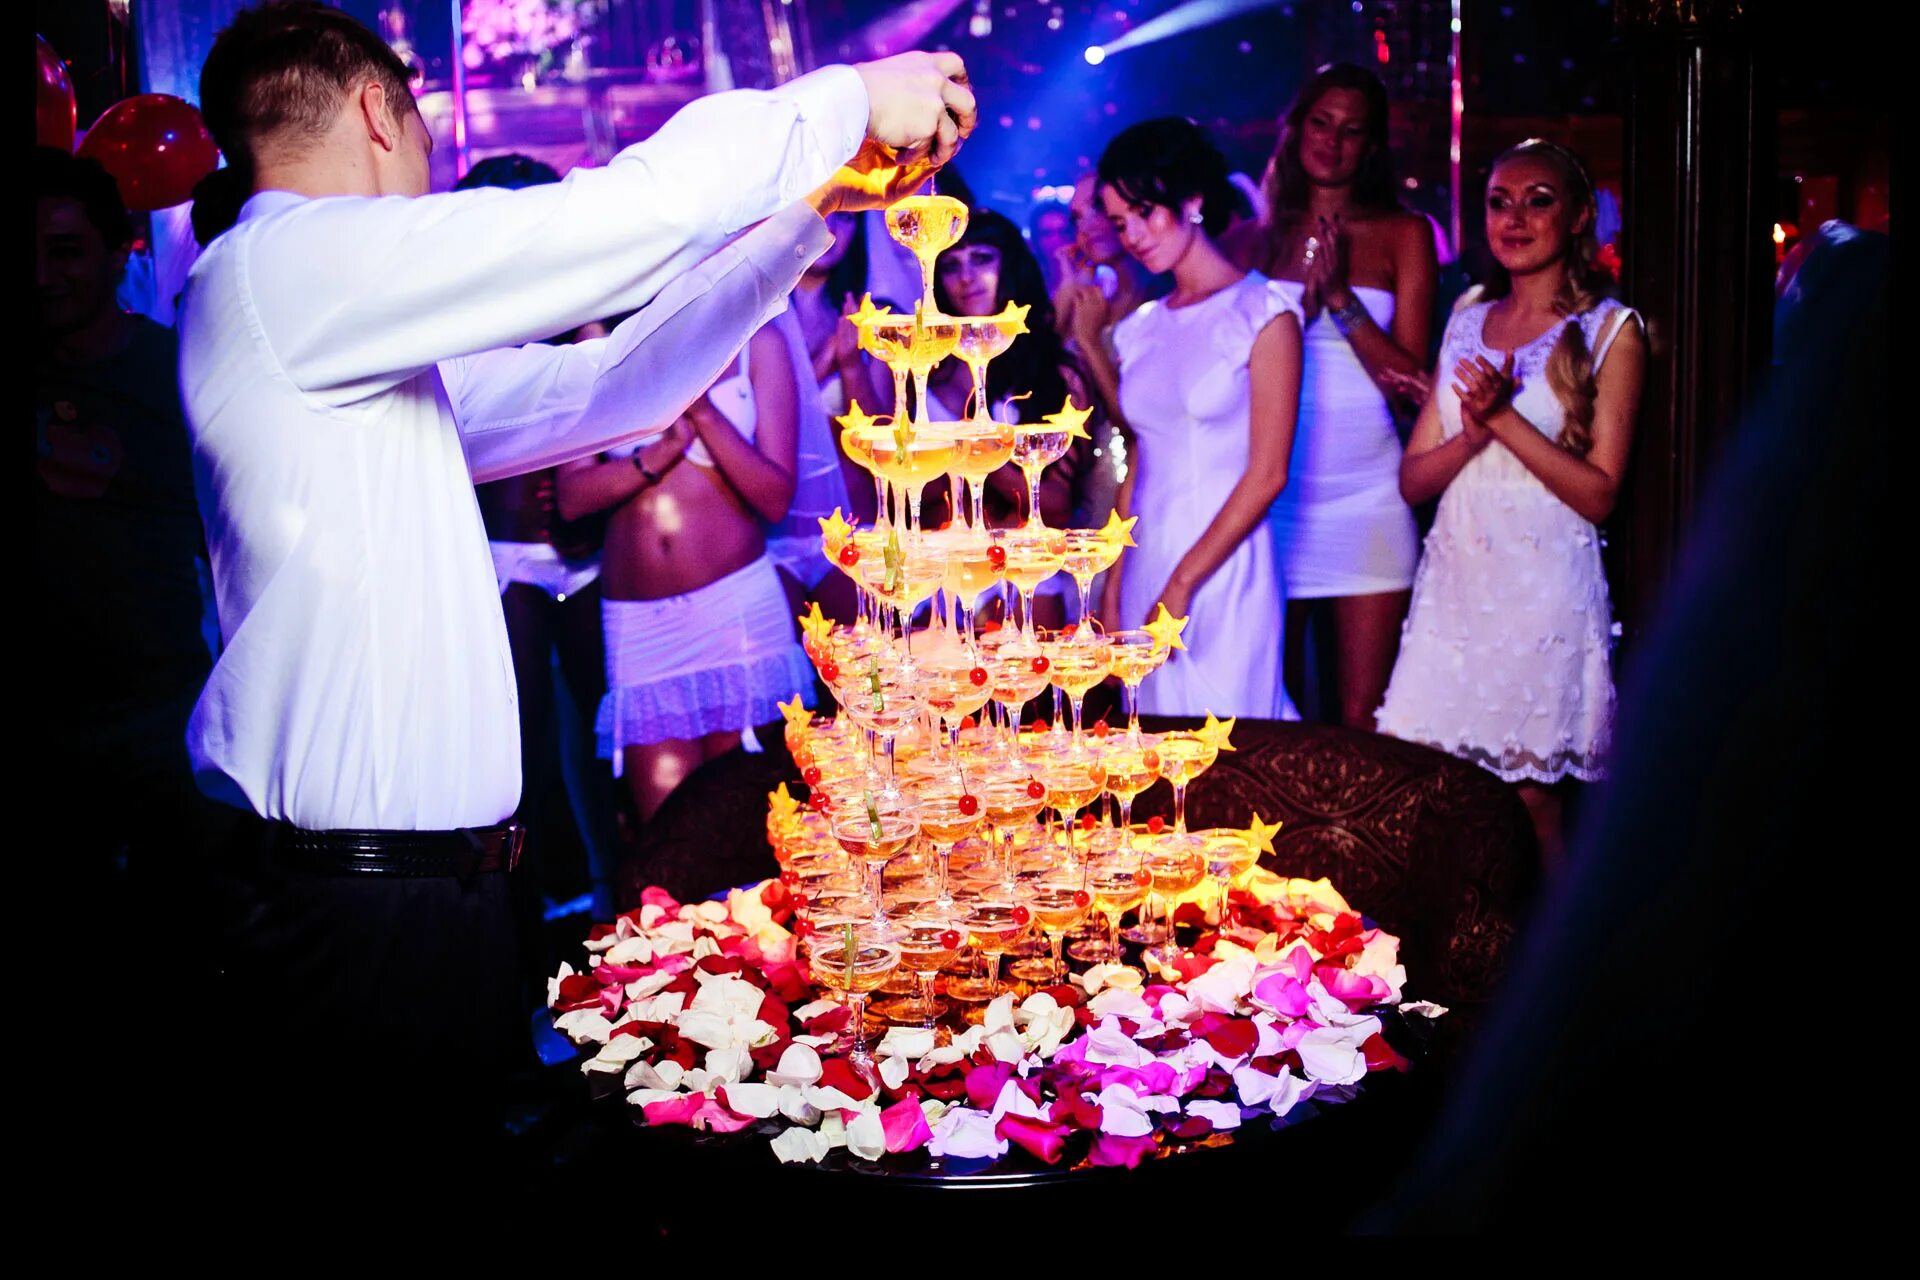 Пирамида шампанского. Пирамида шампанского на свадьбу. Пирамида из шампанского на свадьбу. Горка шампанского на свадьбу. Выносят торт